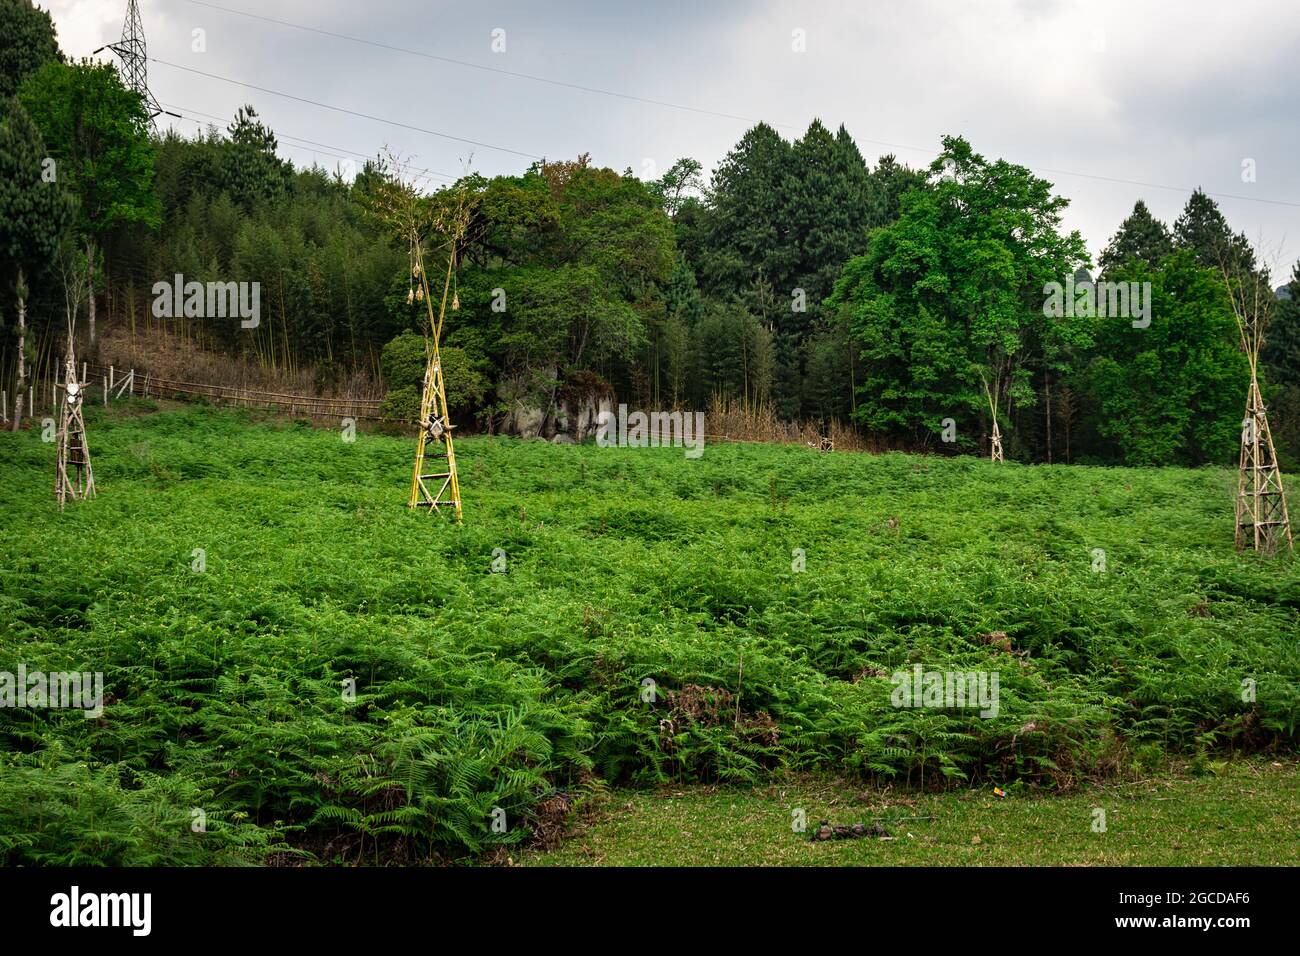 apathani tribe ritual site with religious sign at day image is taken at ziro arunachal pradesh india. Stock Photo